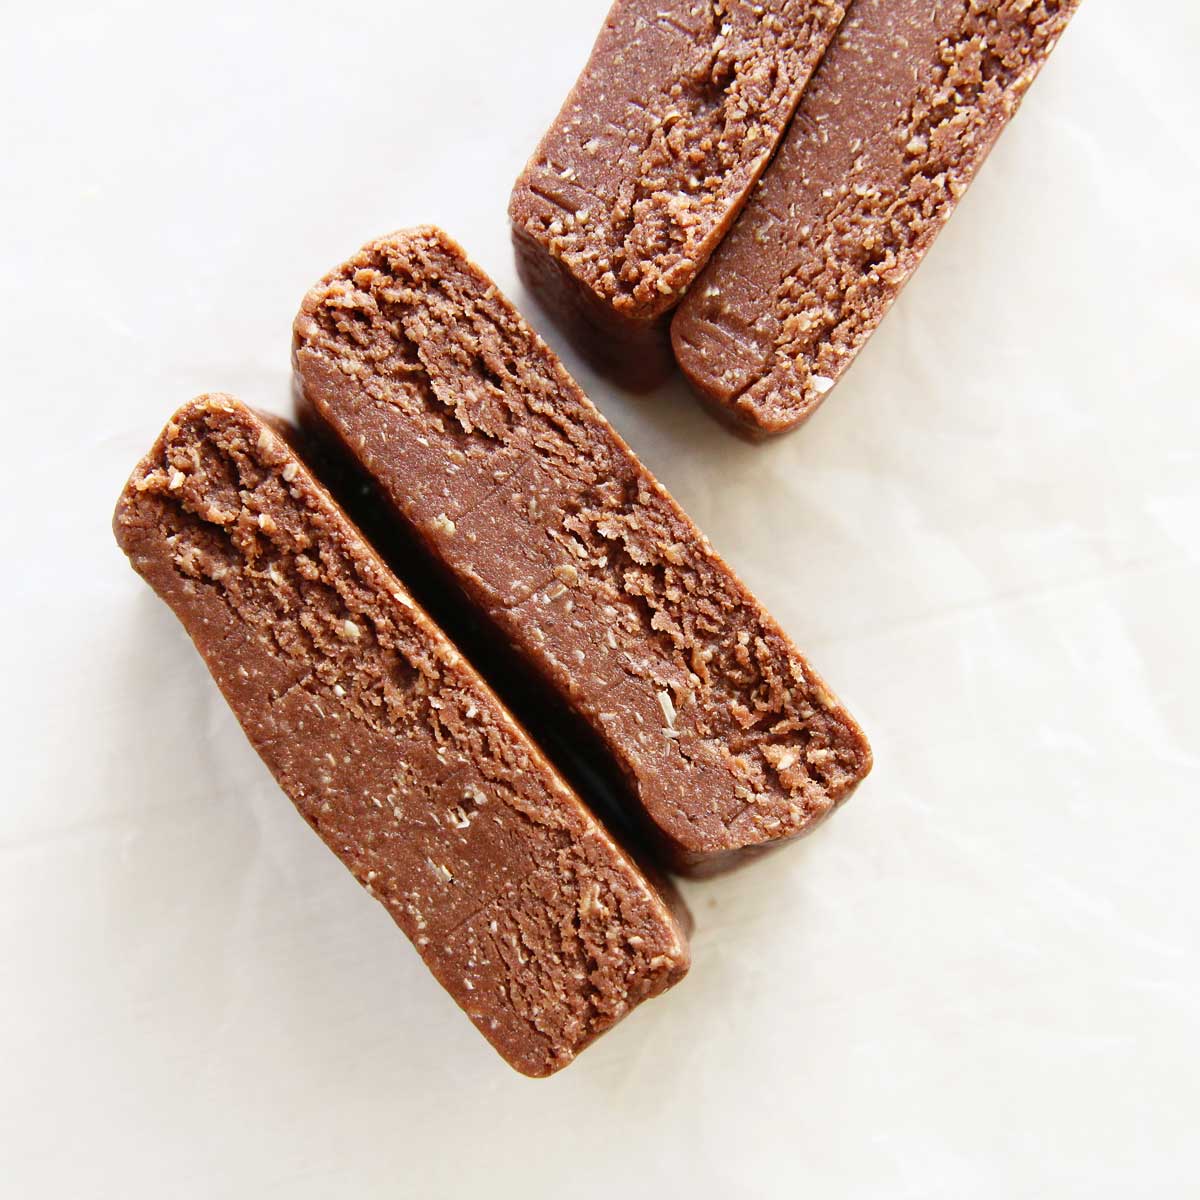 10-Minute Chocolate Peanut Butter Oatmeal Protein Bars - Zero-Sugar Whipped Cream